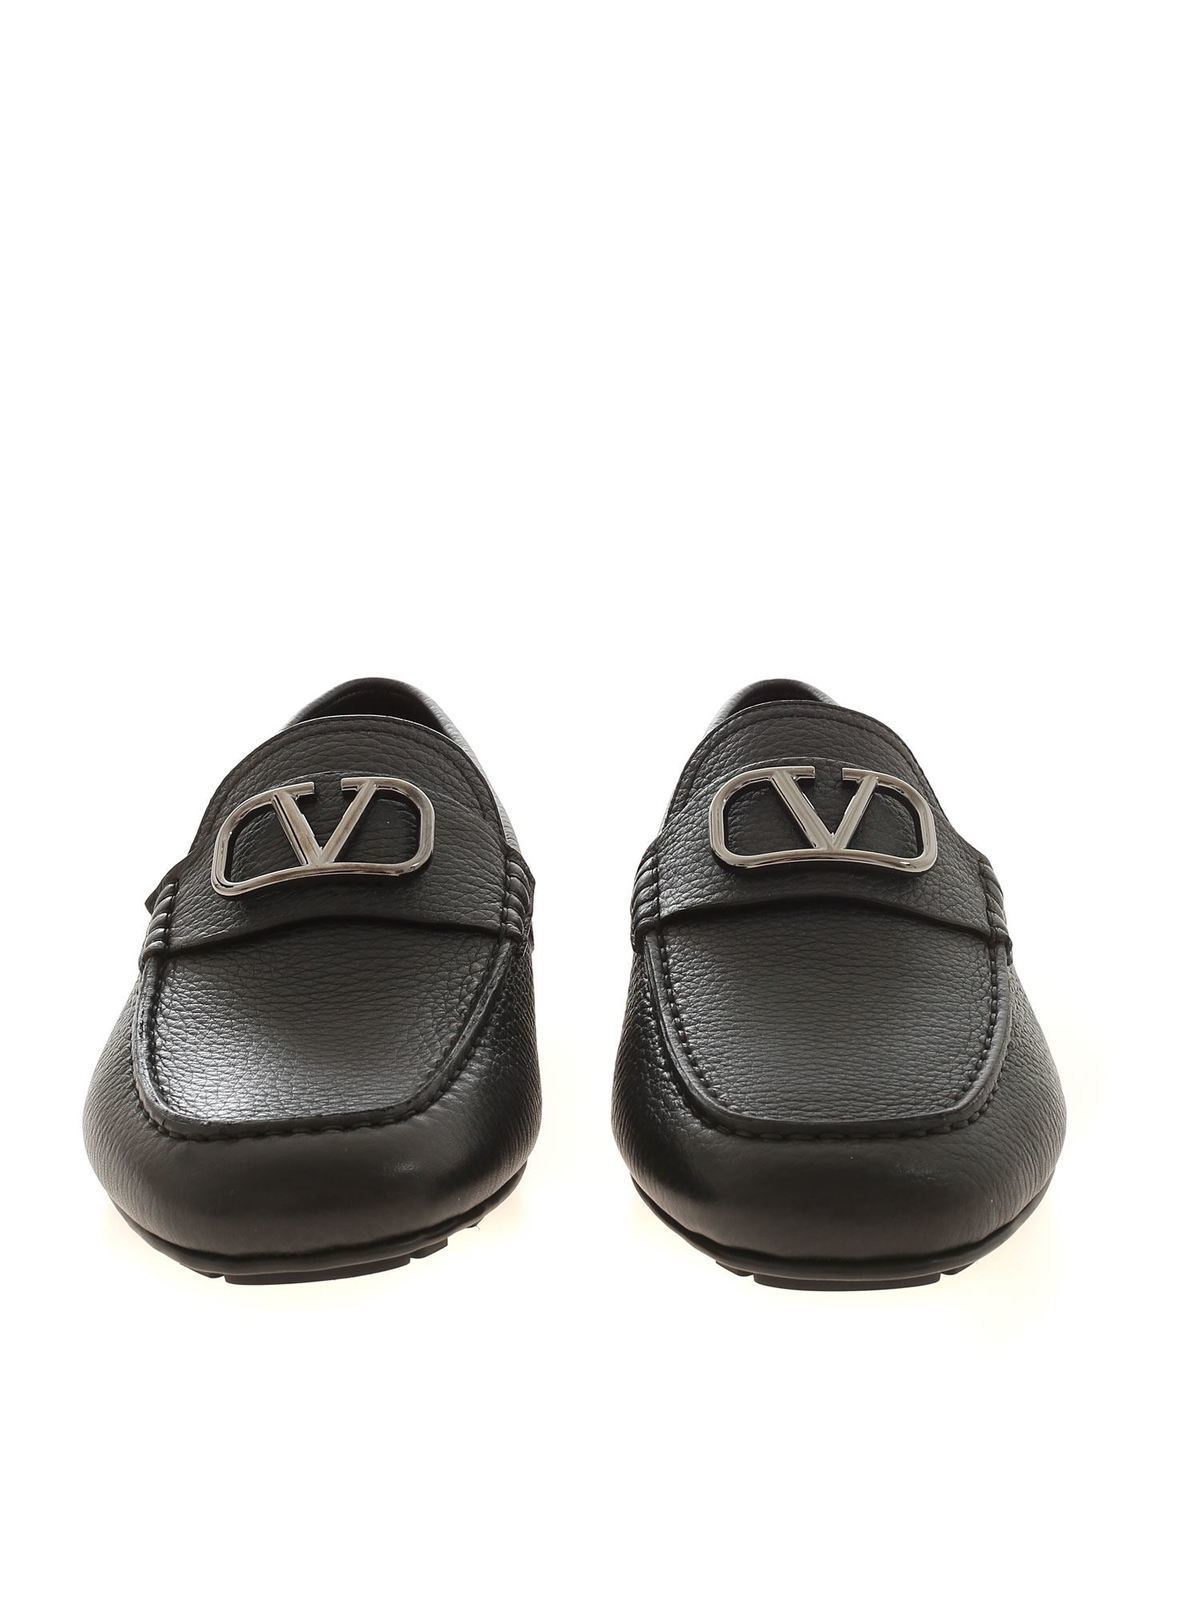 valentino slippers black